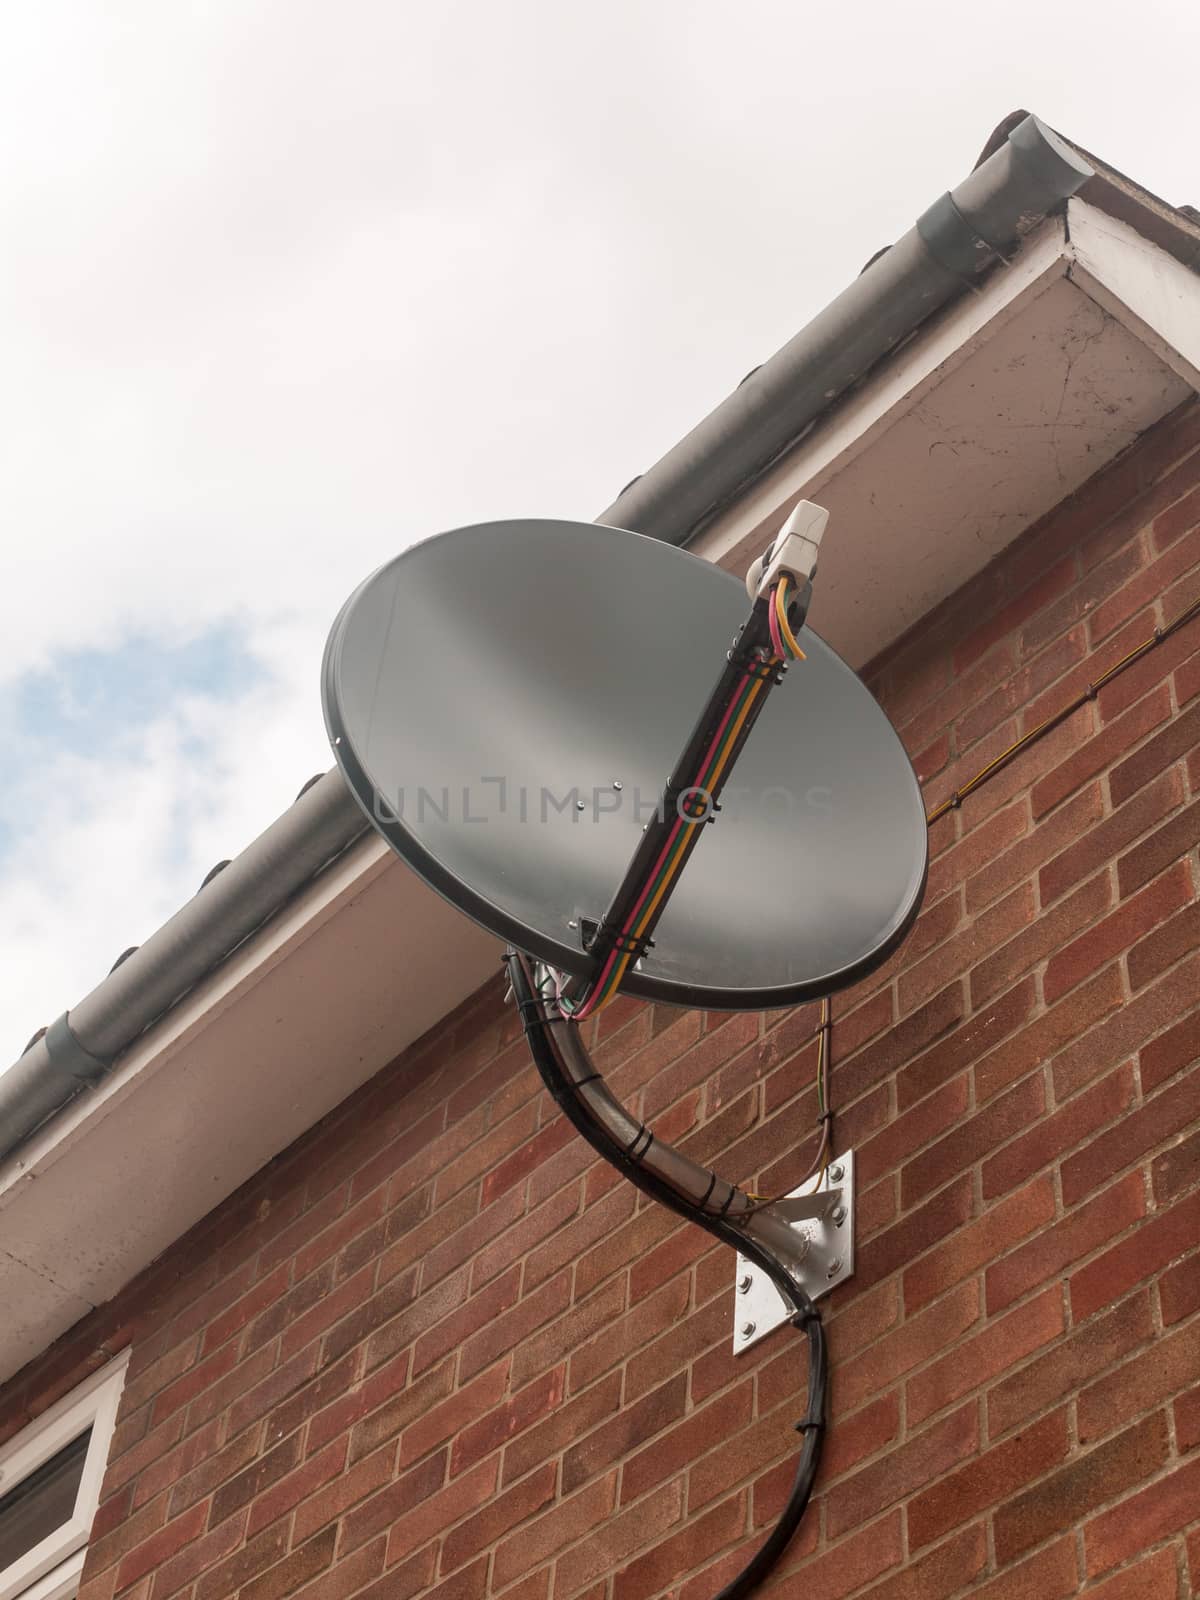 Stock Photo - a black sky dish satelite up close on brick wall by callumrc